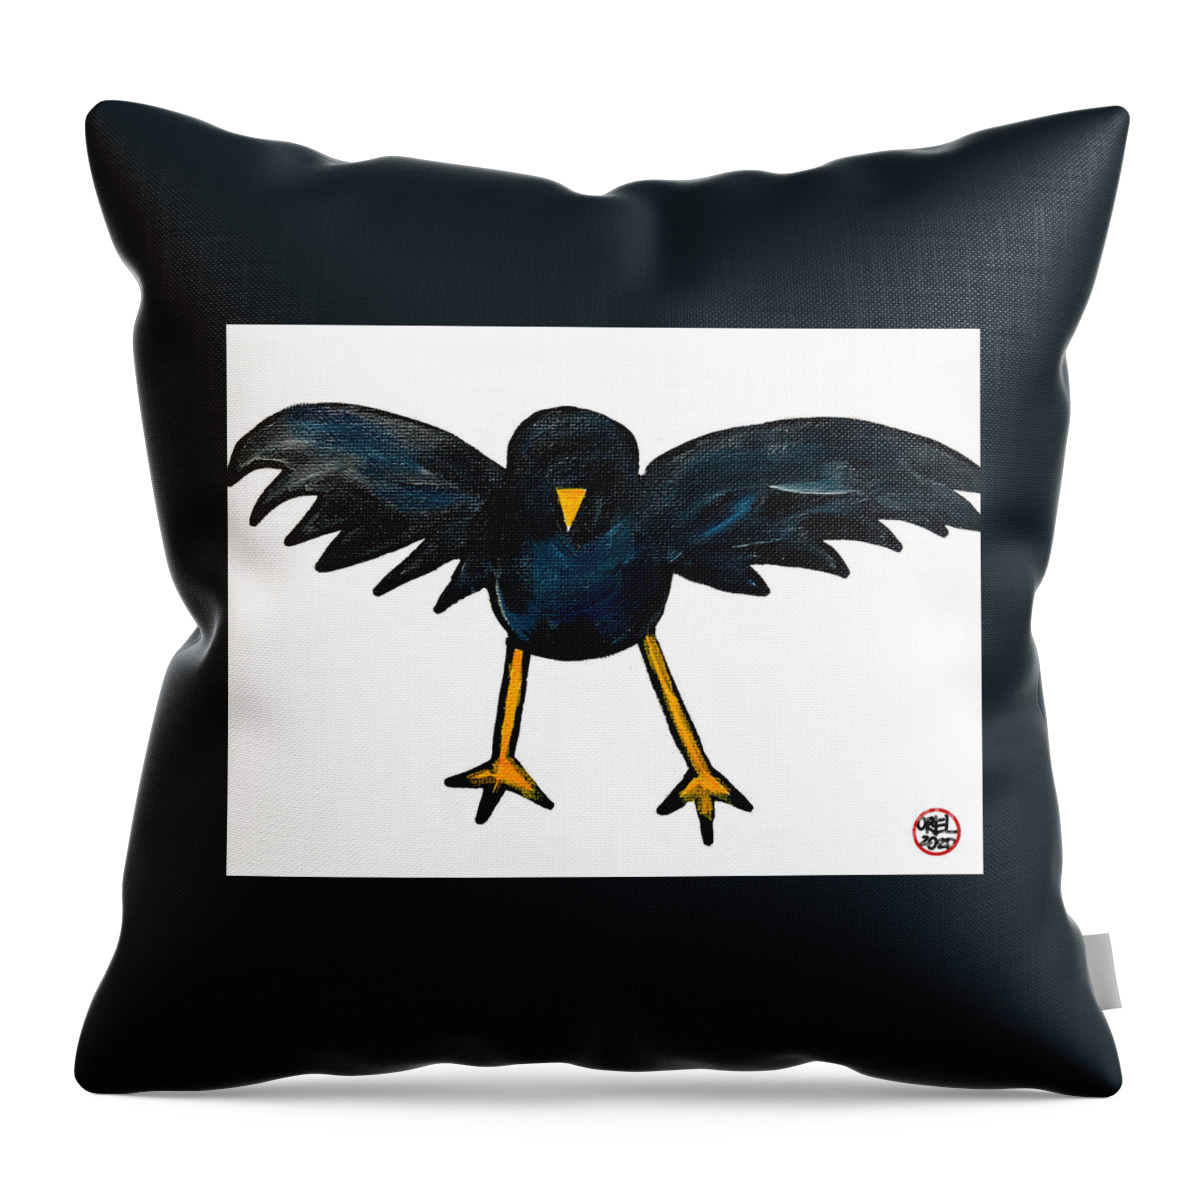  Throw Pillow featuring the painting Black Bird by Oriel Ceballos